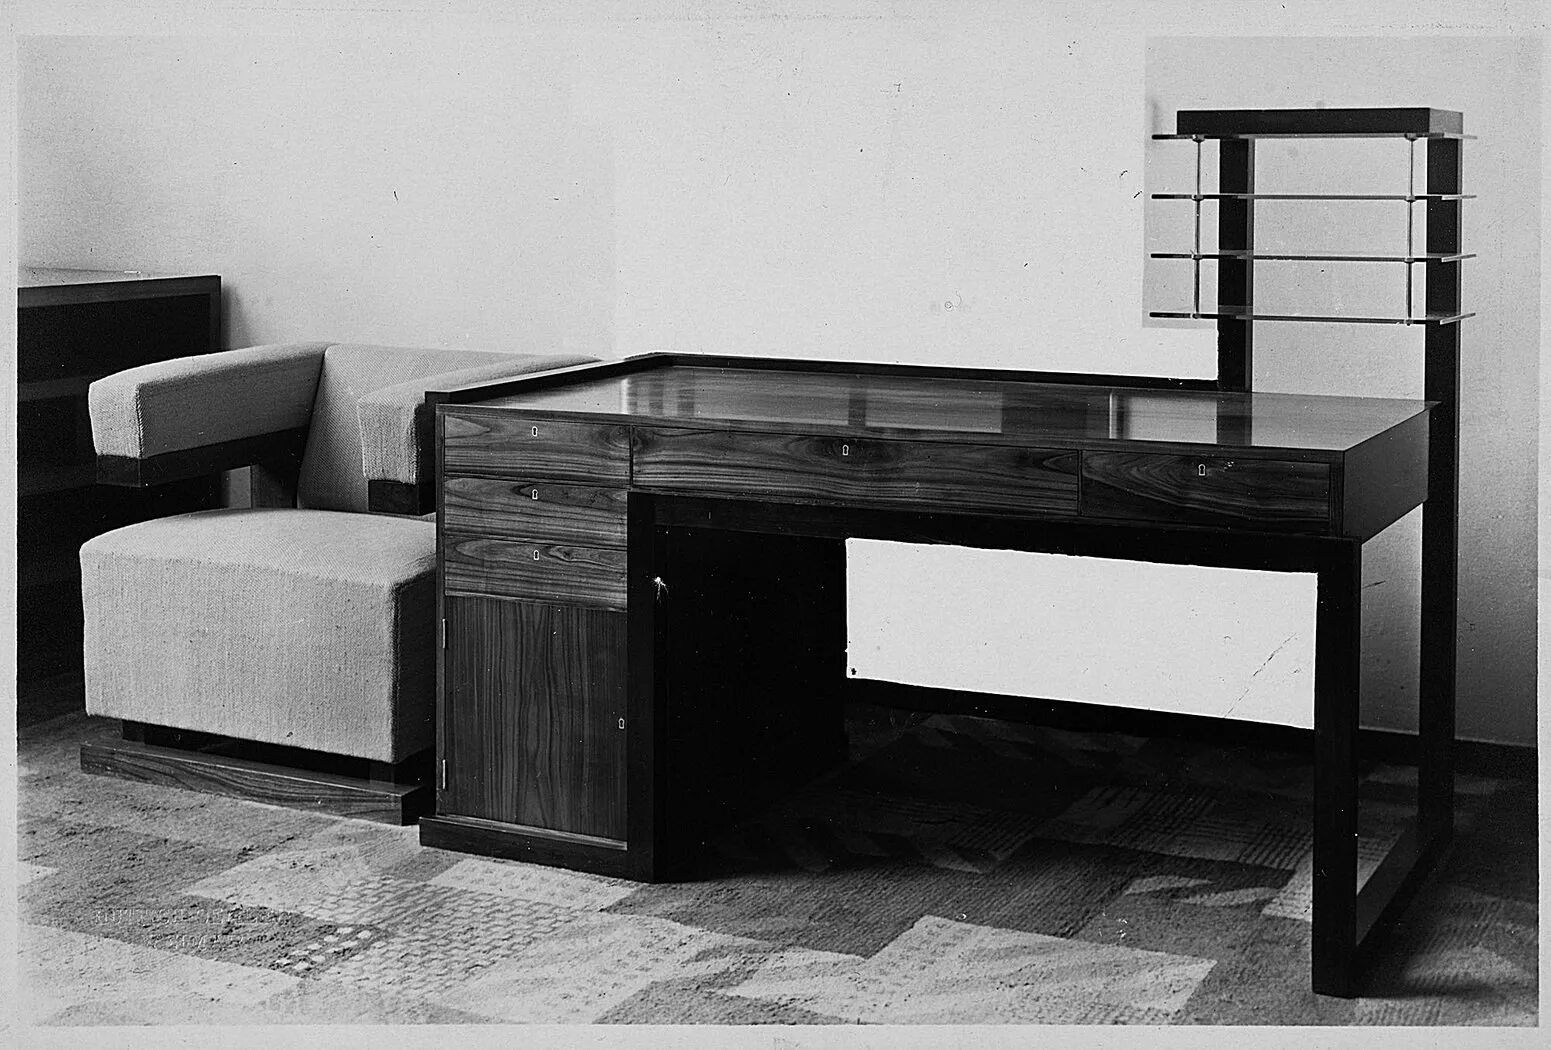 Мебель 20 века. Стиль Баухауз 20 век. Стол Баухауз 1910.